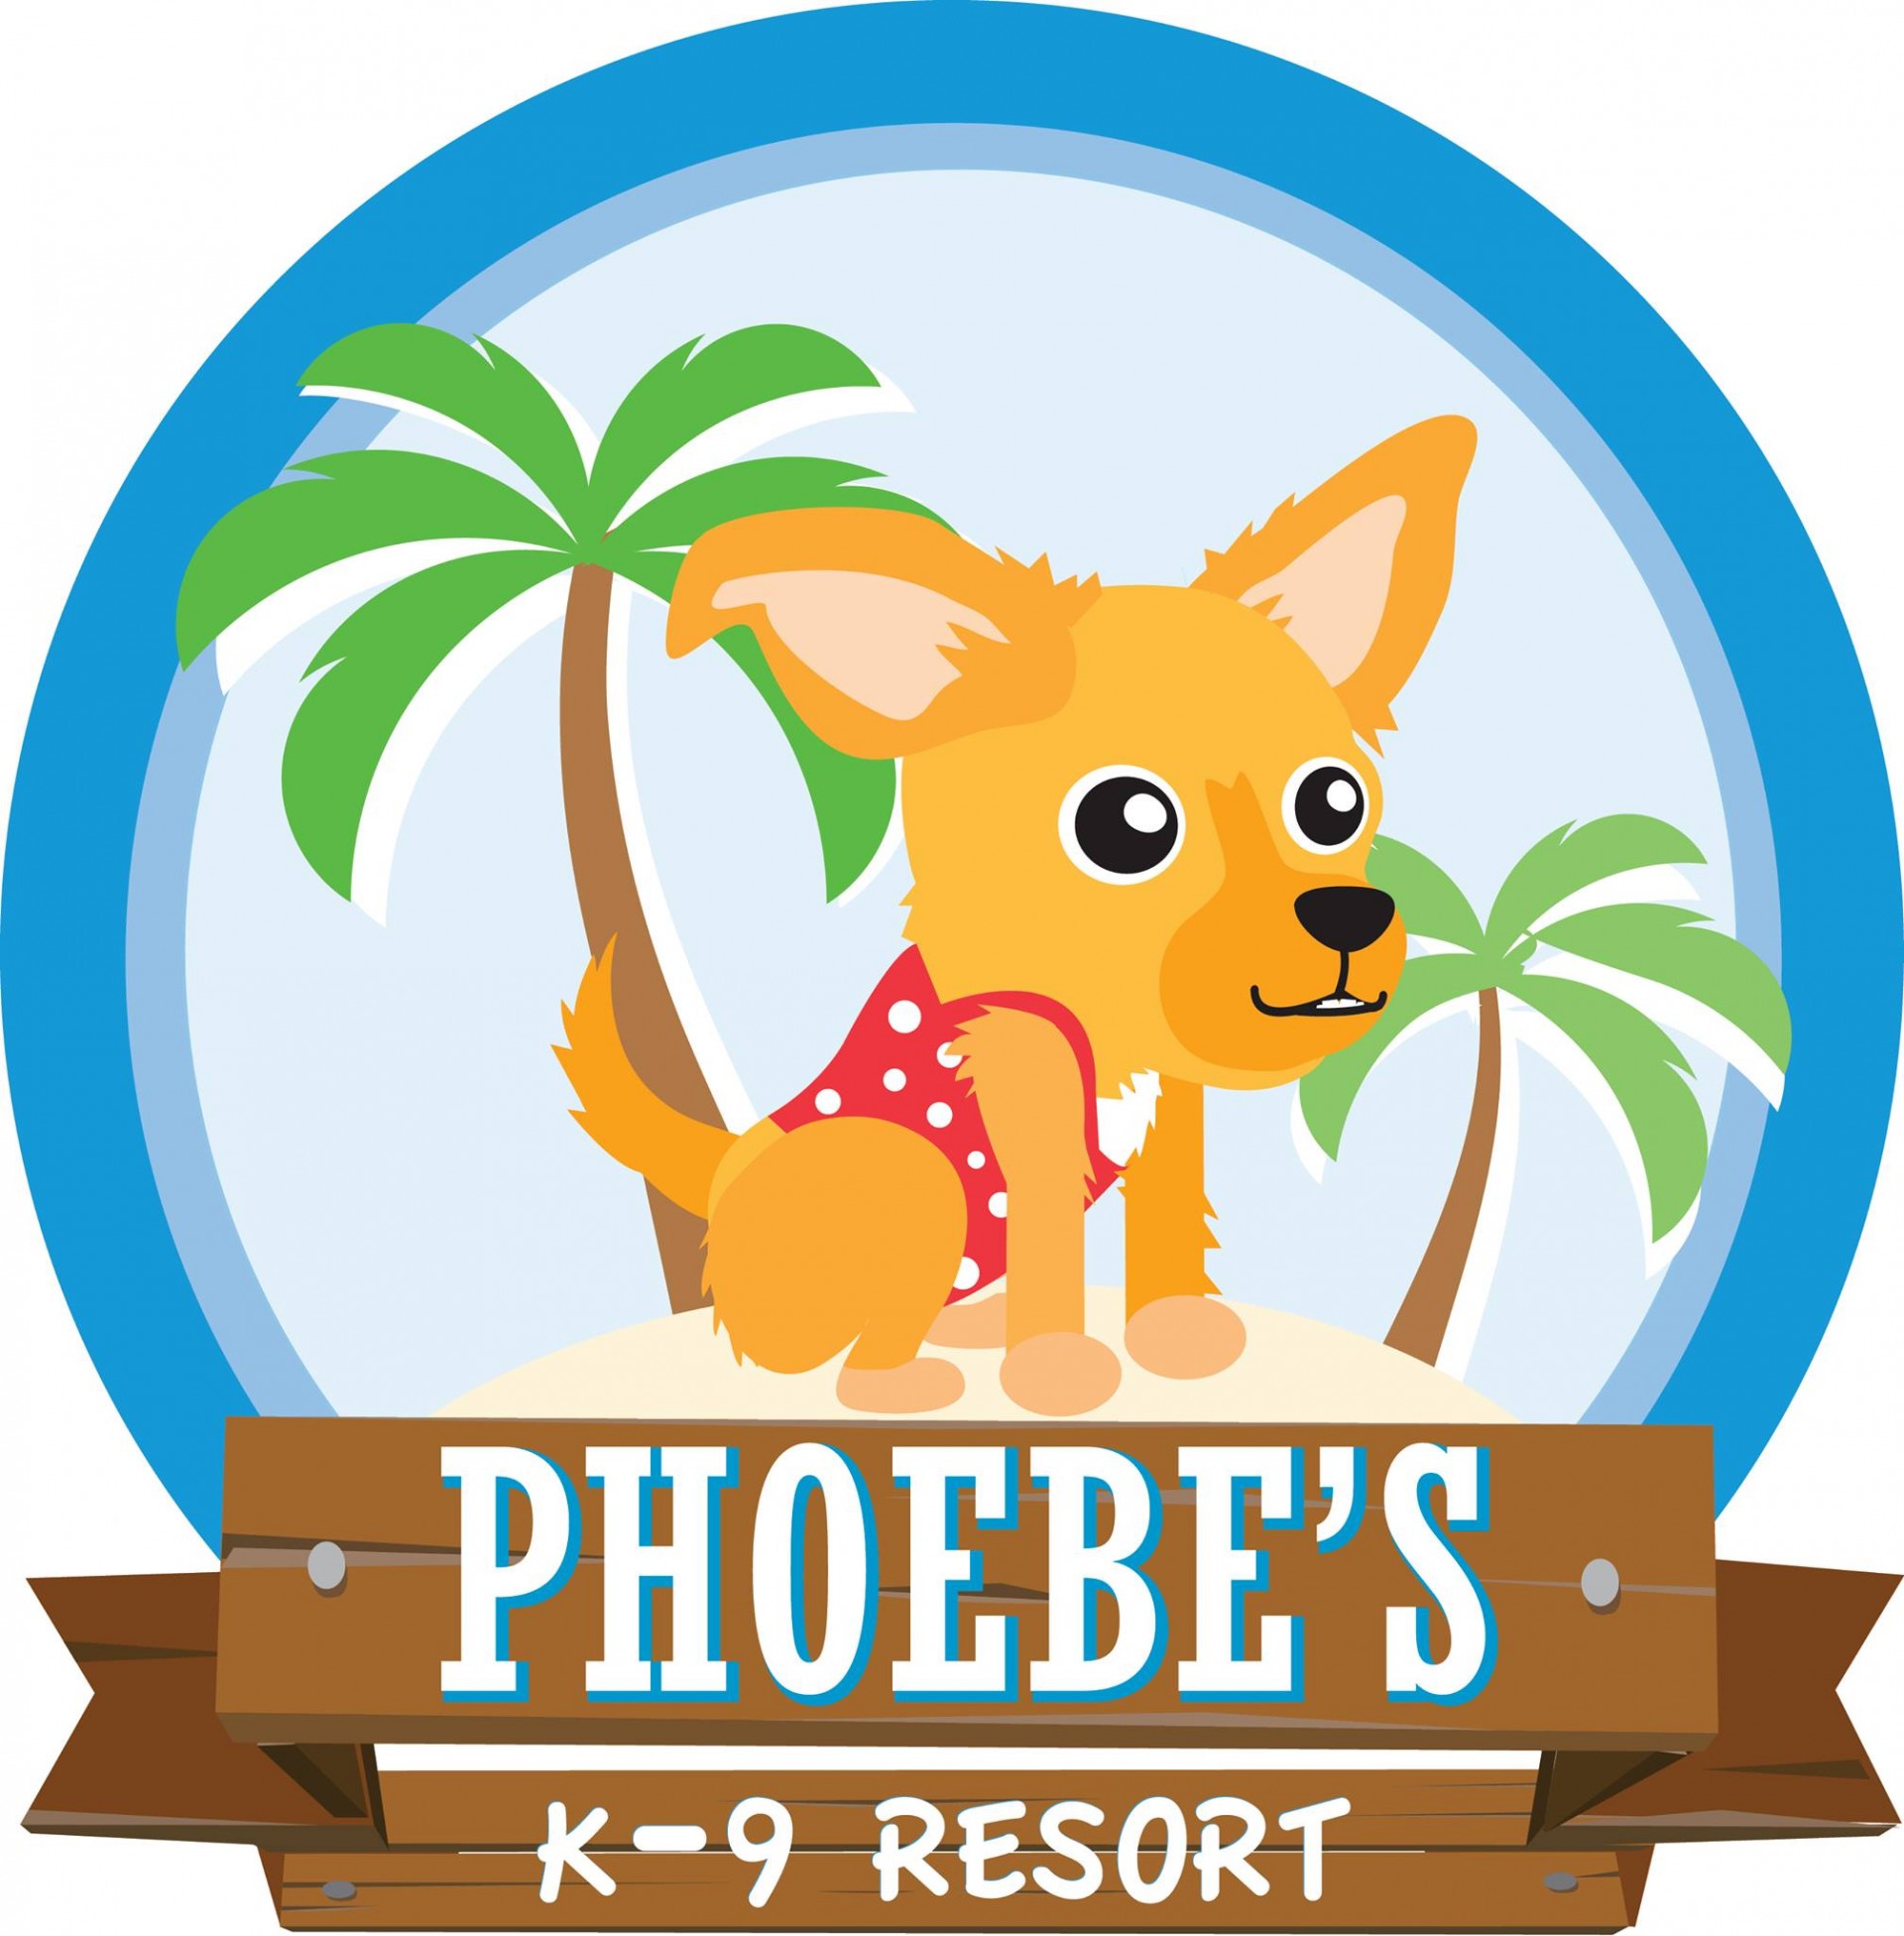 Phoebe's K9 Resort